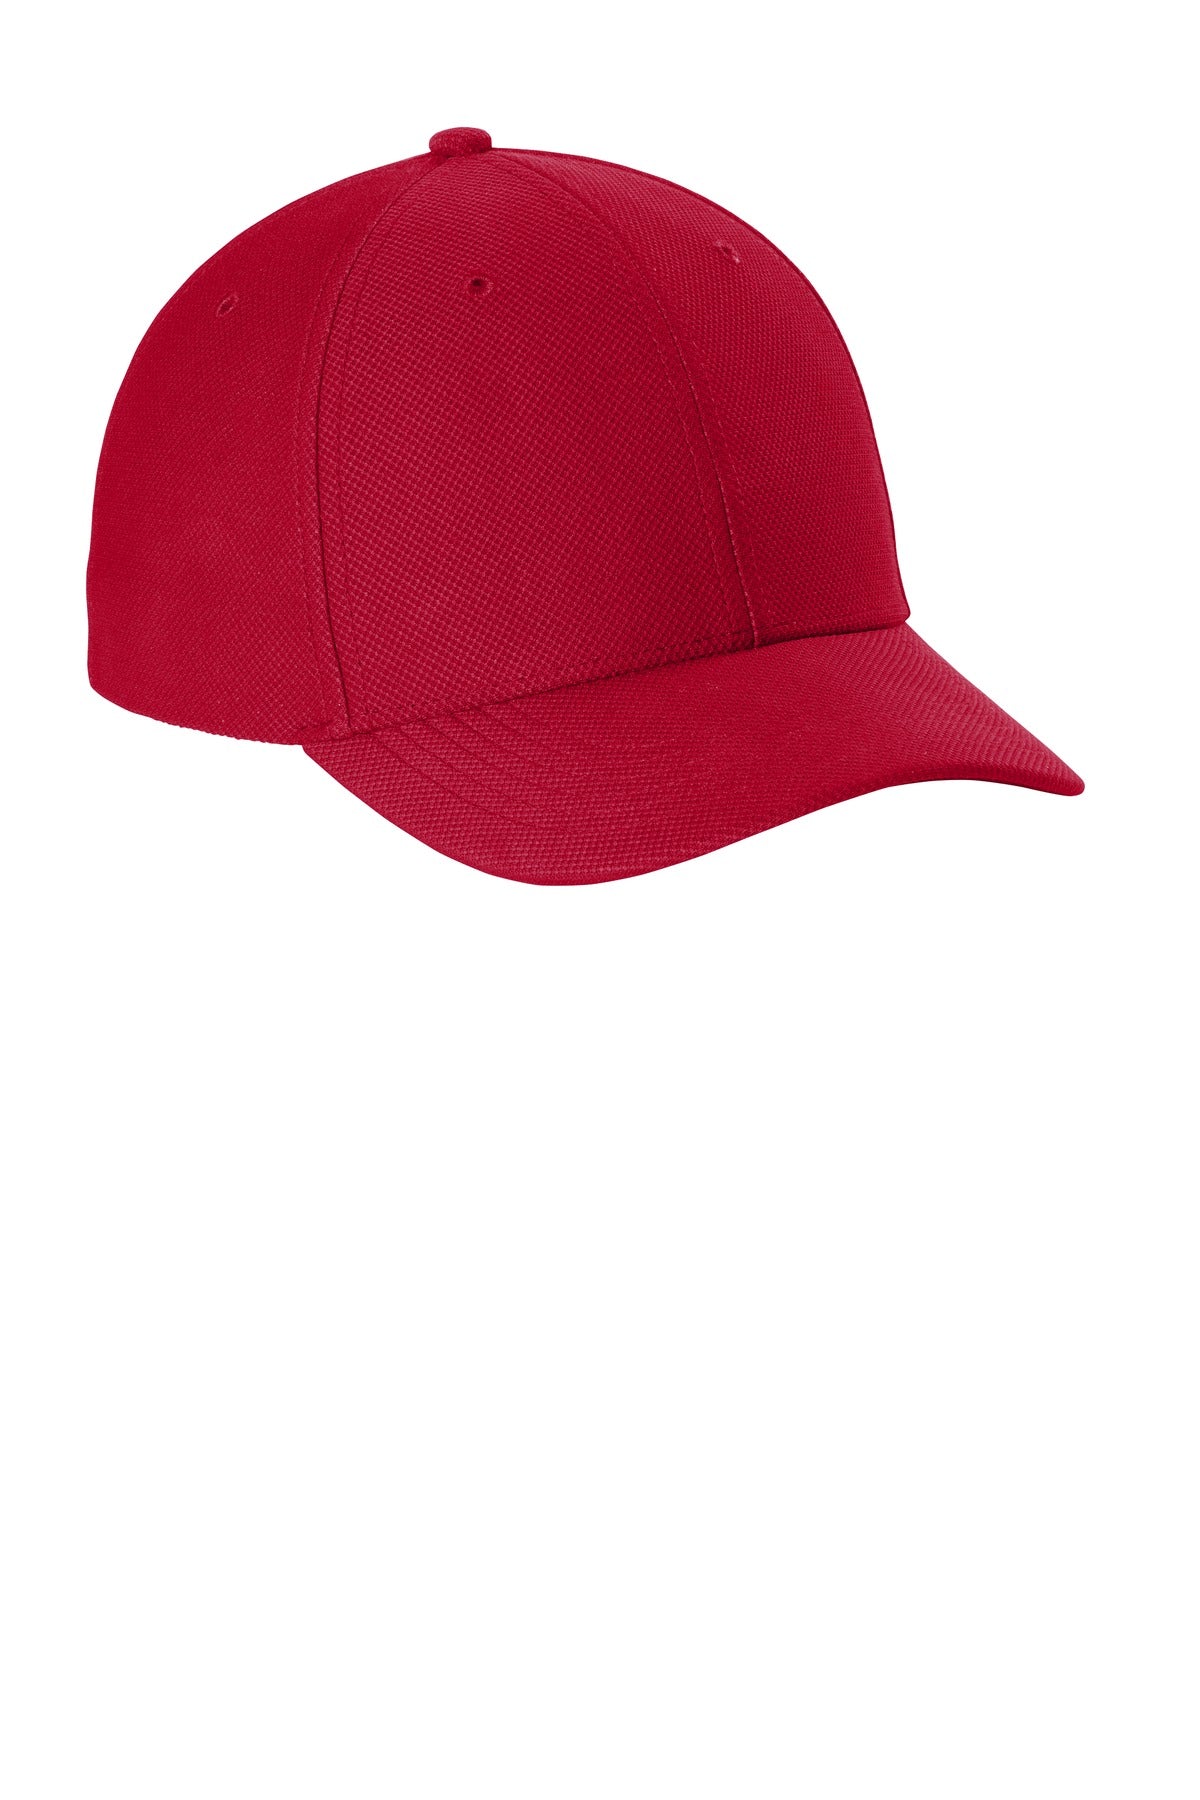 Caps True Red OSFA Sport-Tek